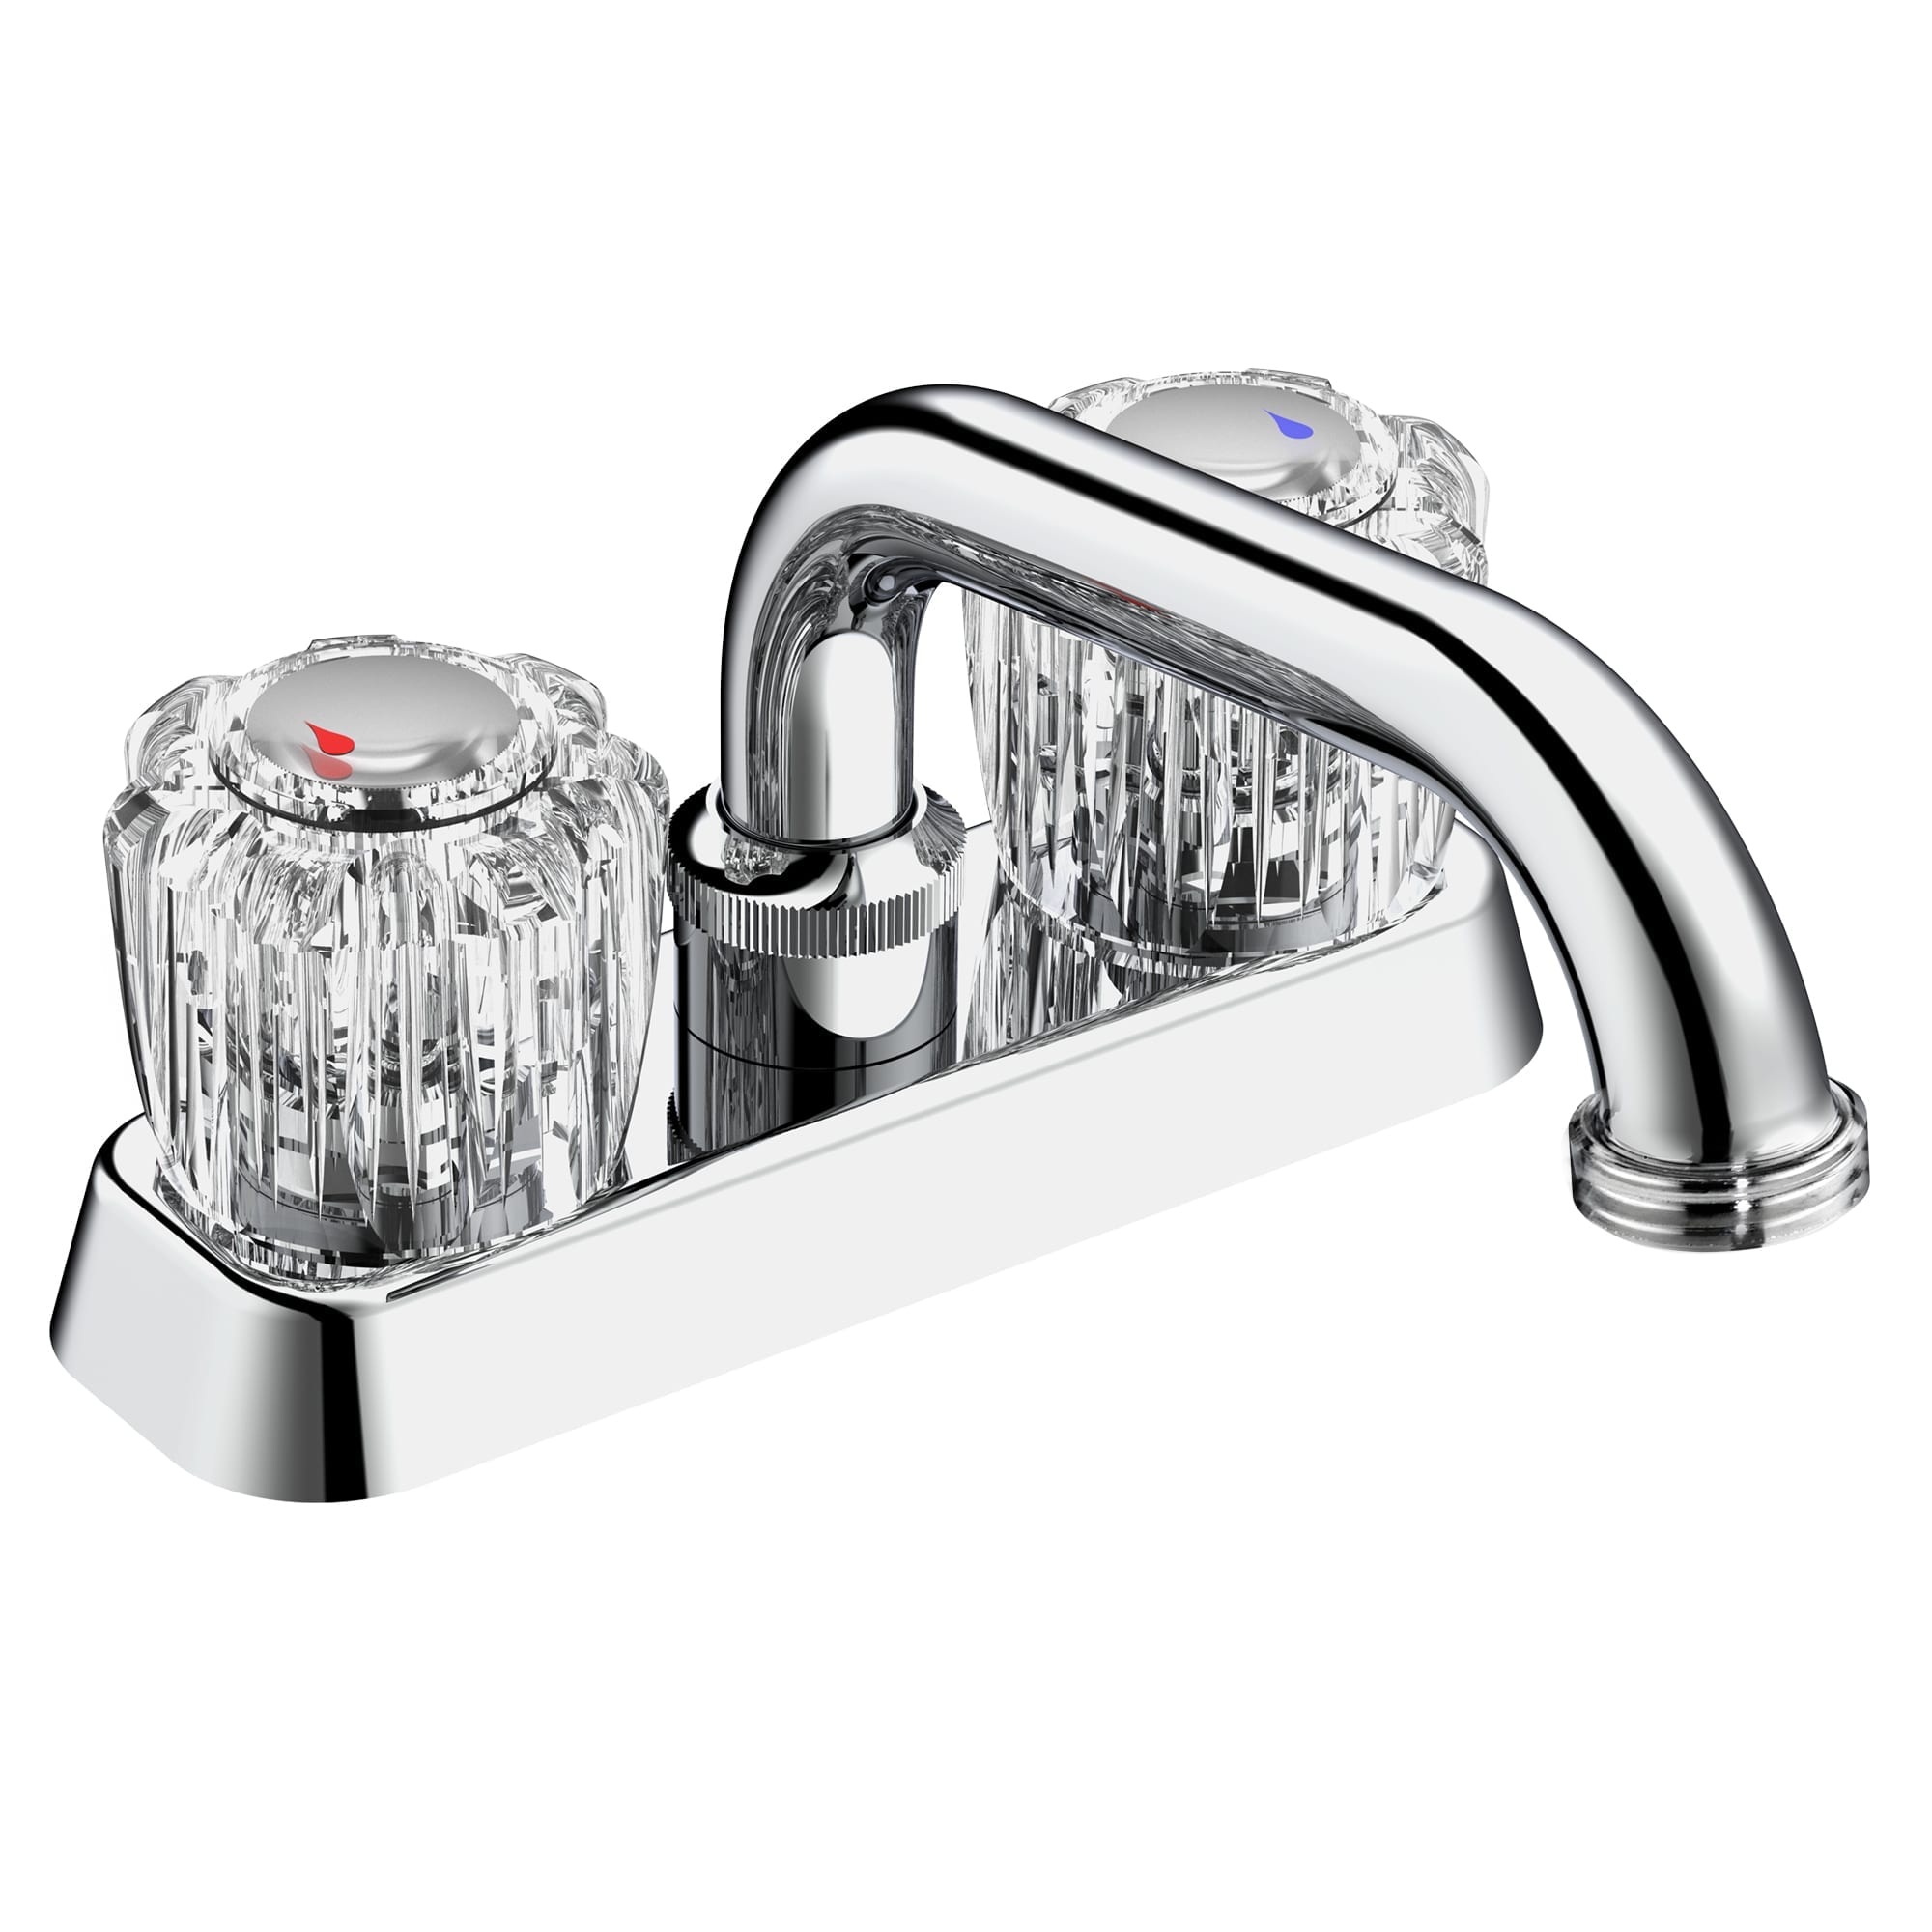 Eba40wcp Laundry Tub Faucet With 2 Handles, Polished Chrome - Acrylic Round